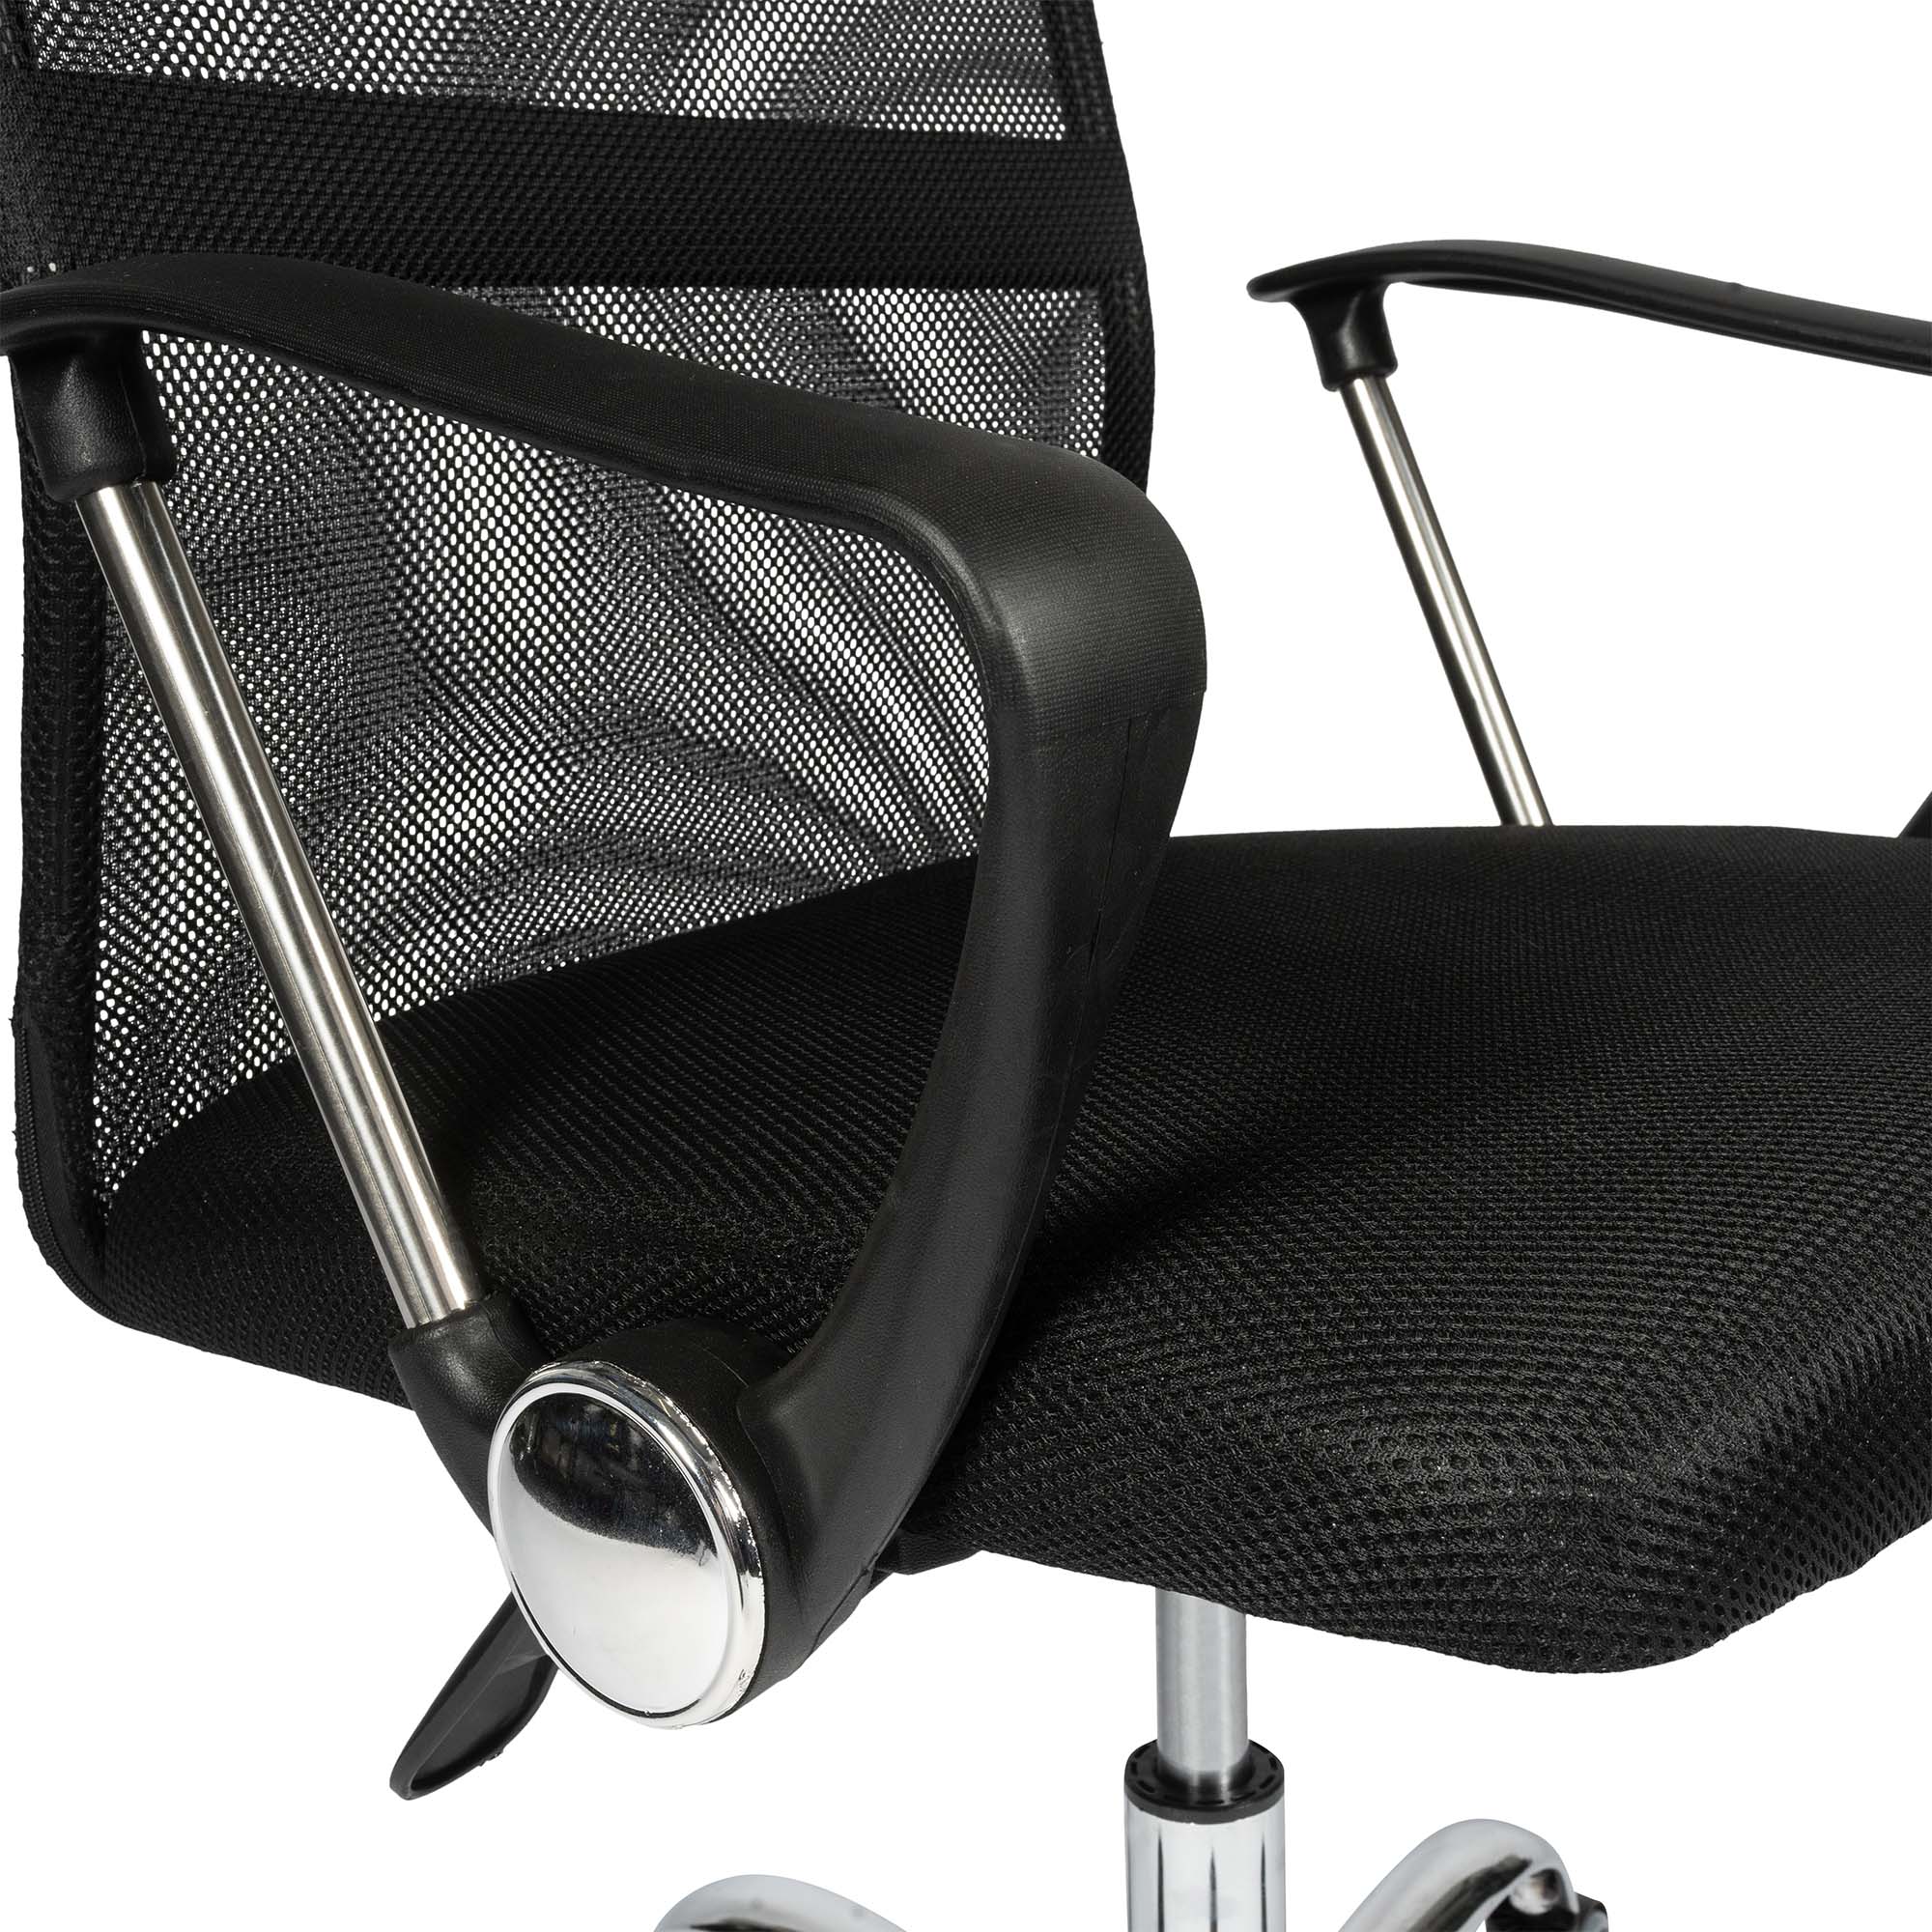 Ergodu Ergonomic Mesh Office Chair armrests